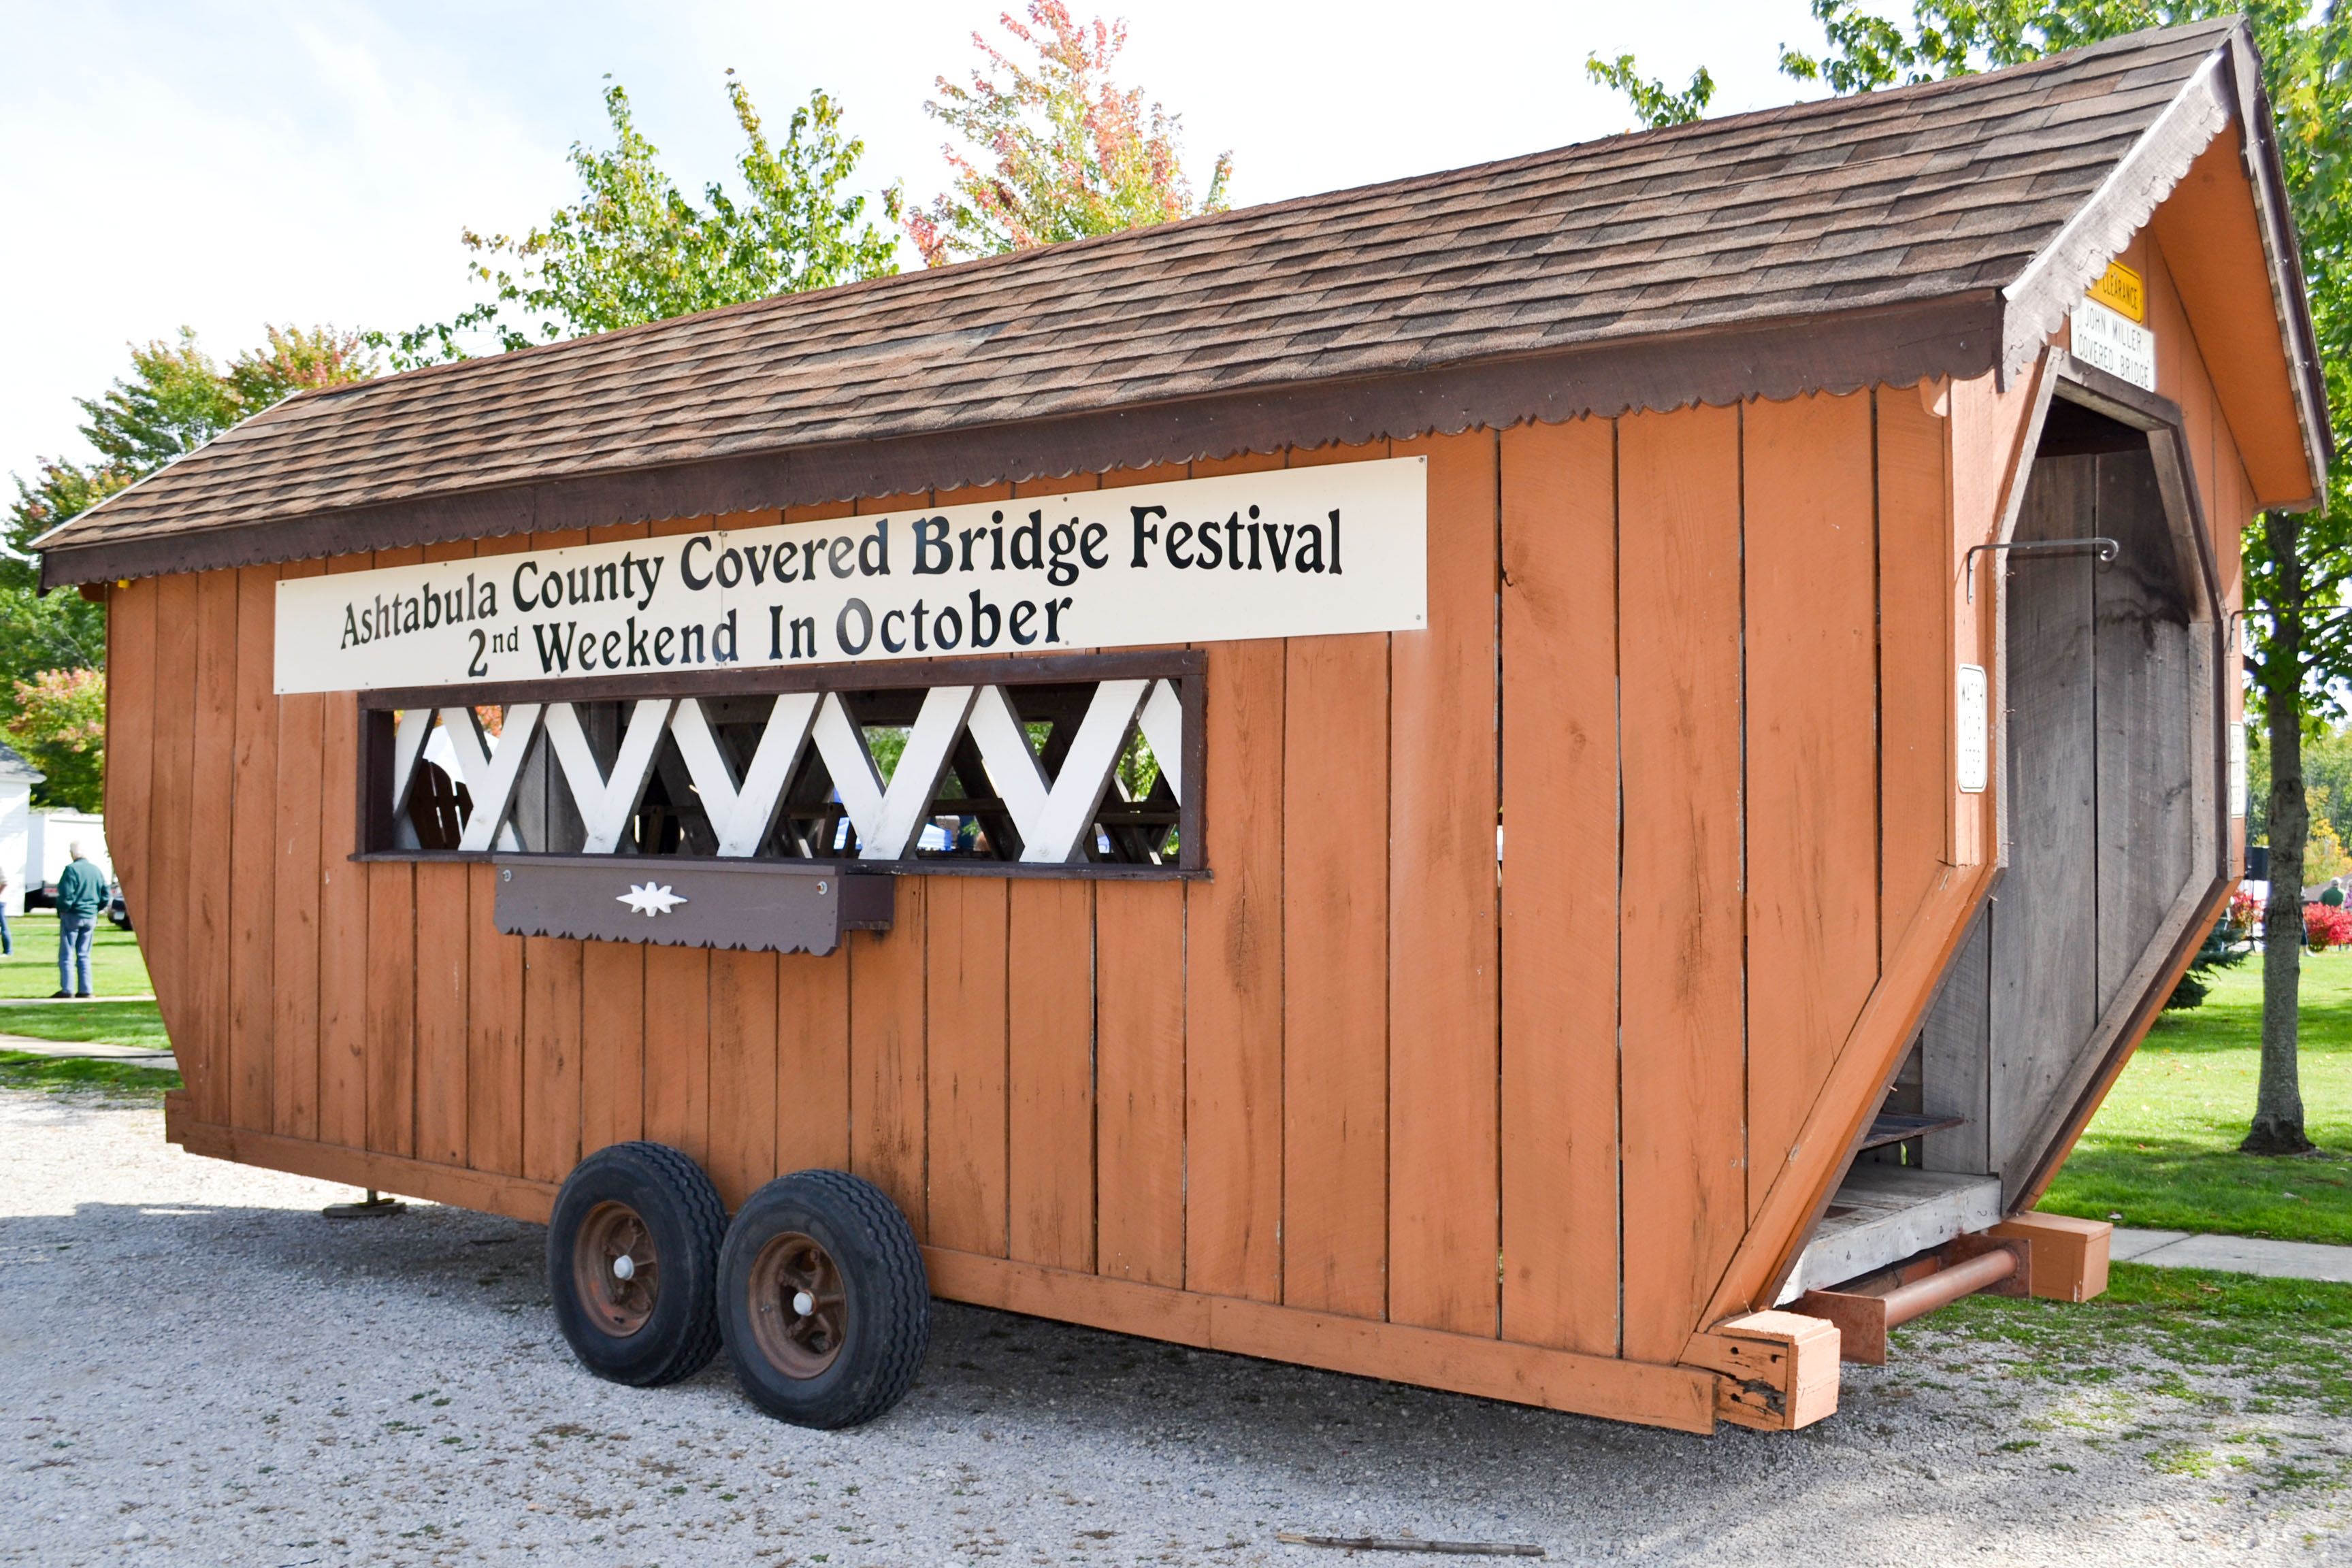 Ashtabula County Covered Bridge Festival